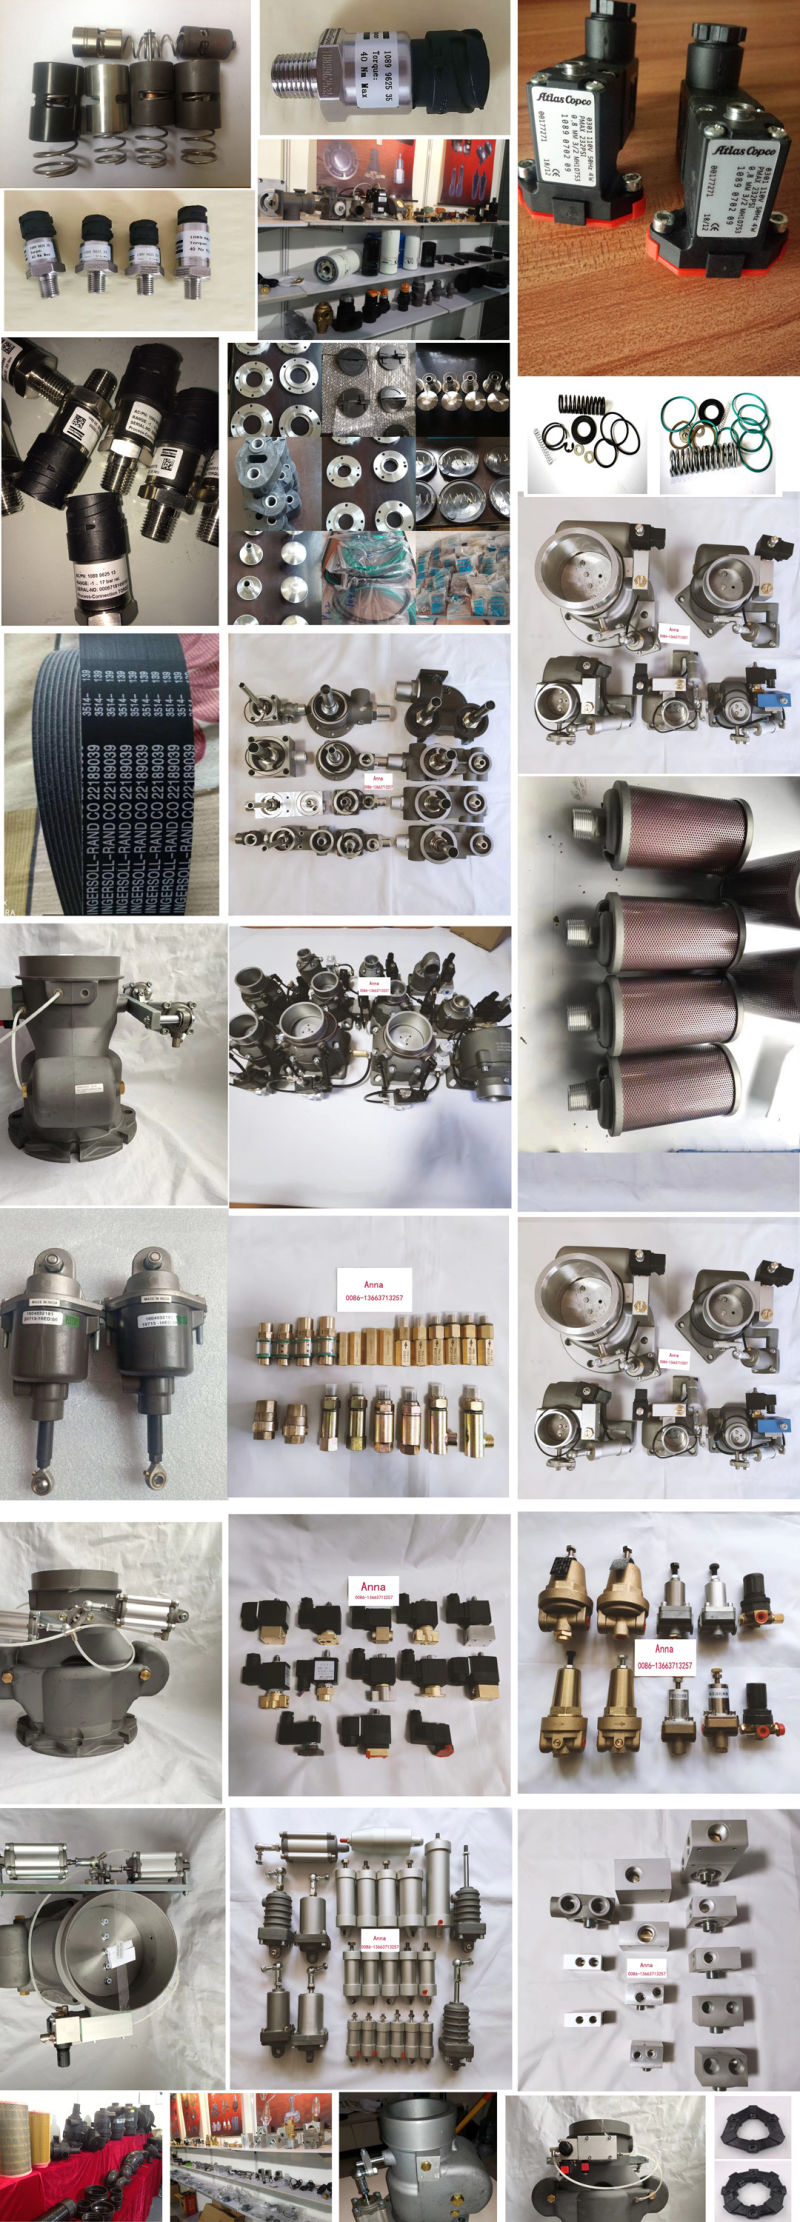 1089039747=1089039743 Atlas Air Compressor Pressure Switch Mdr53-16